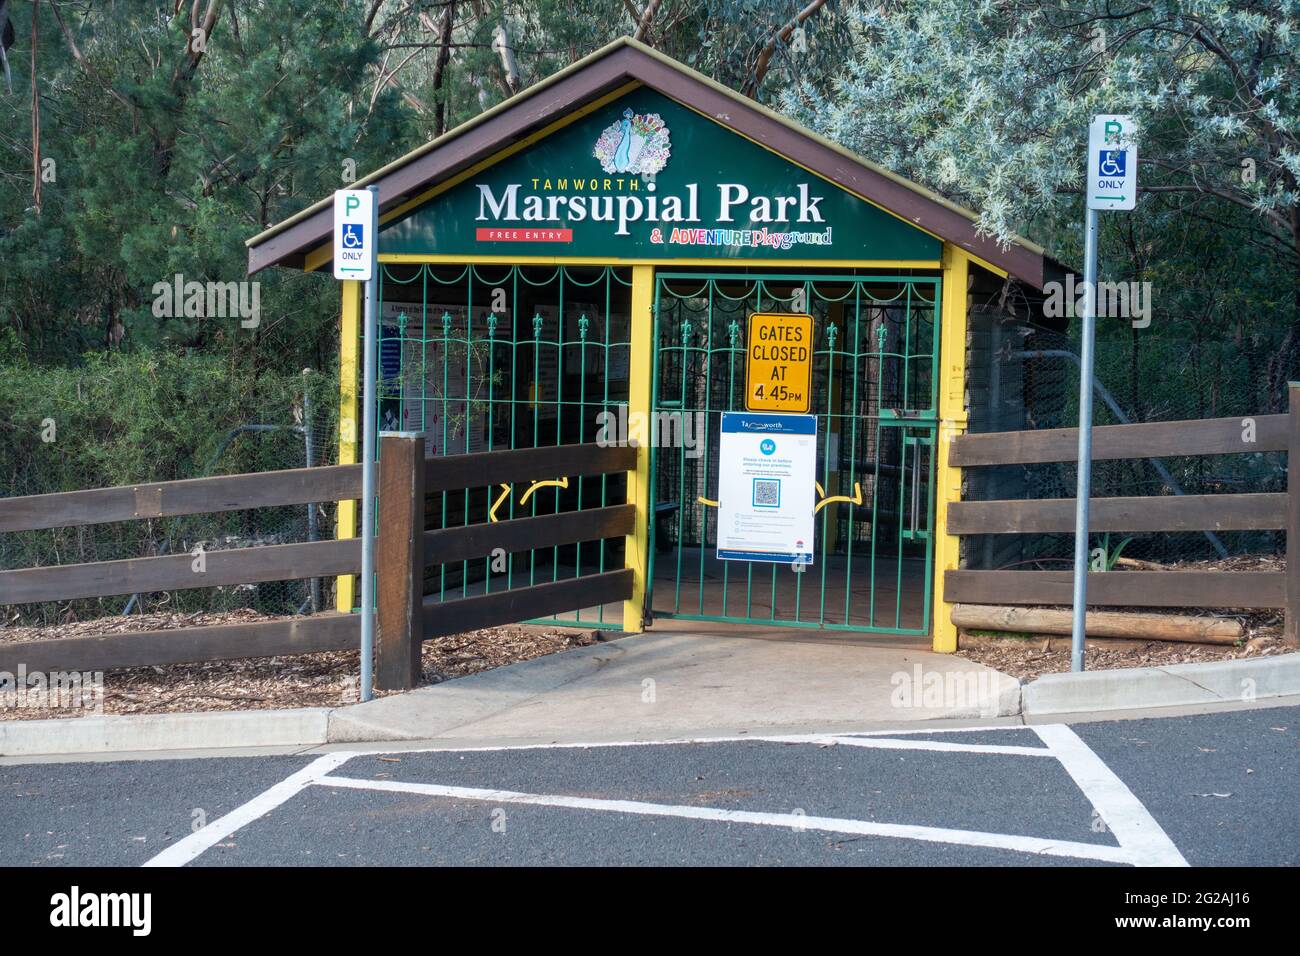 Eintritt Zum Marspual Park, Tamworth Australia Stockfoto